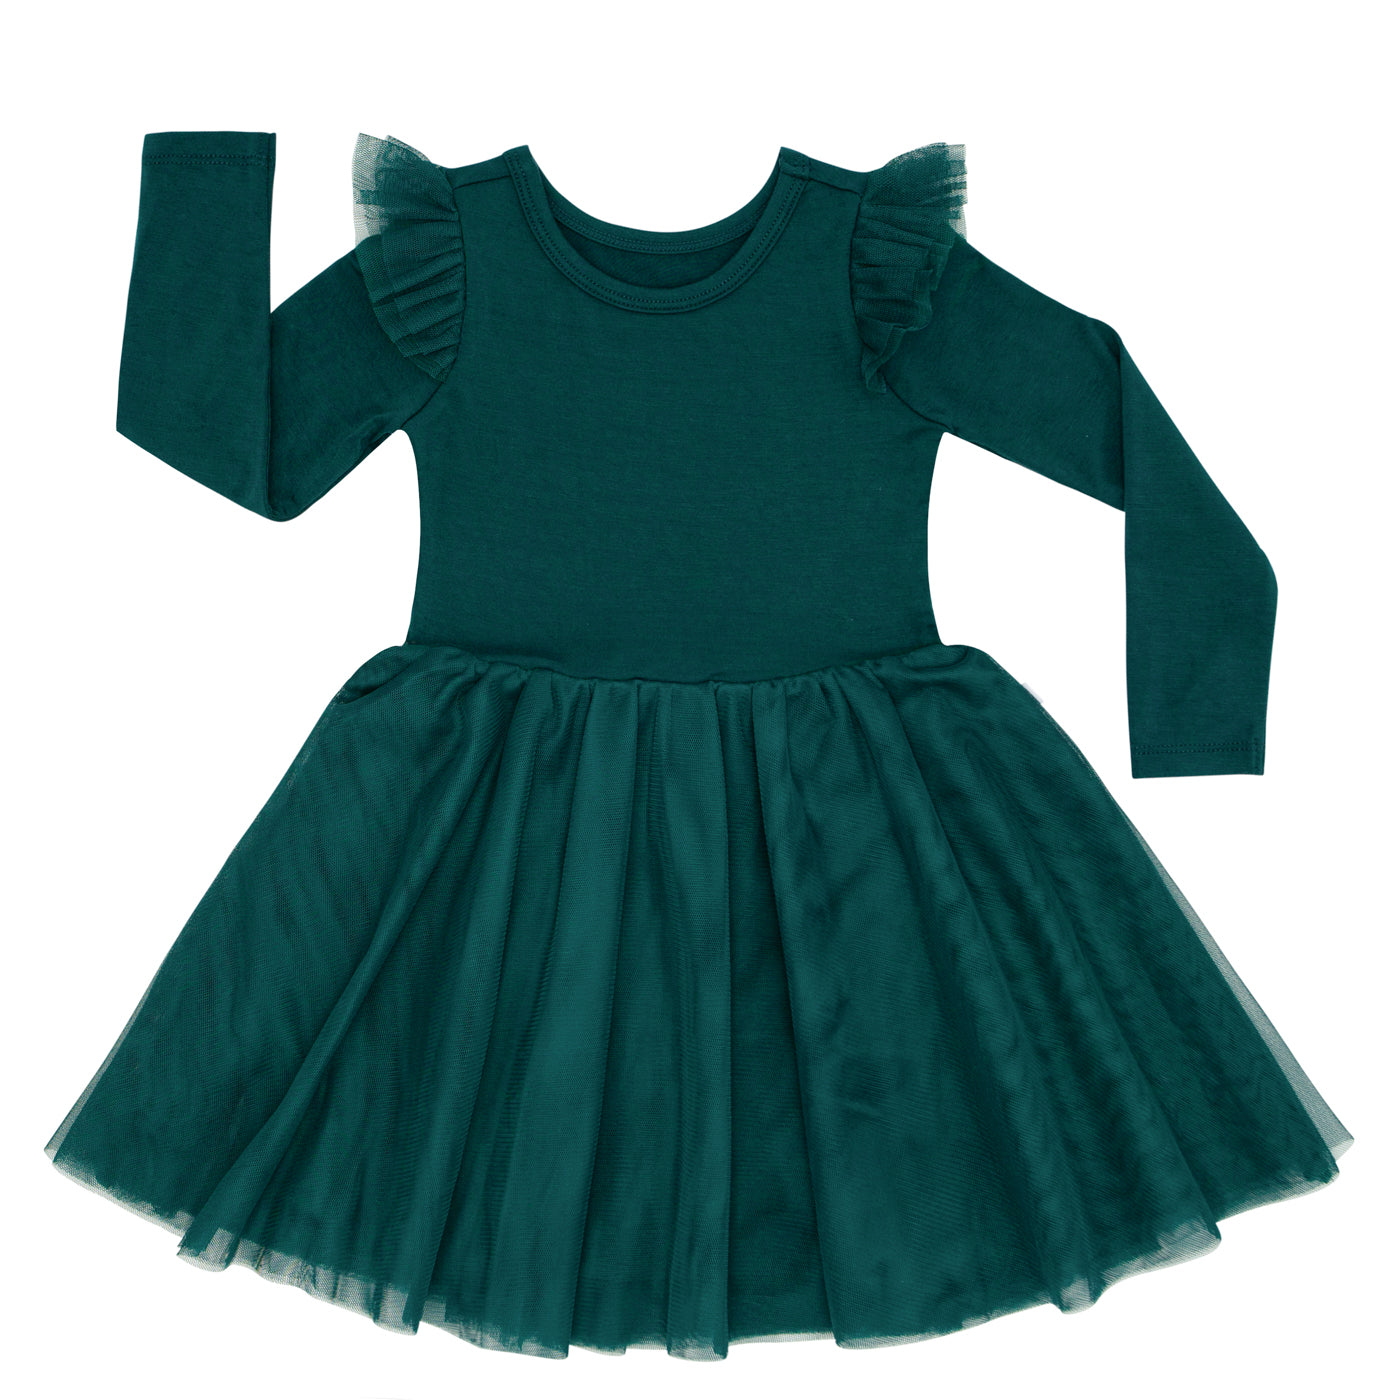 Flat lay image of Emerald flutter tutu dress